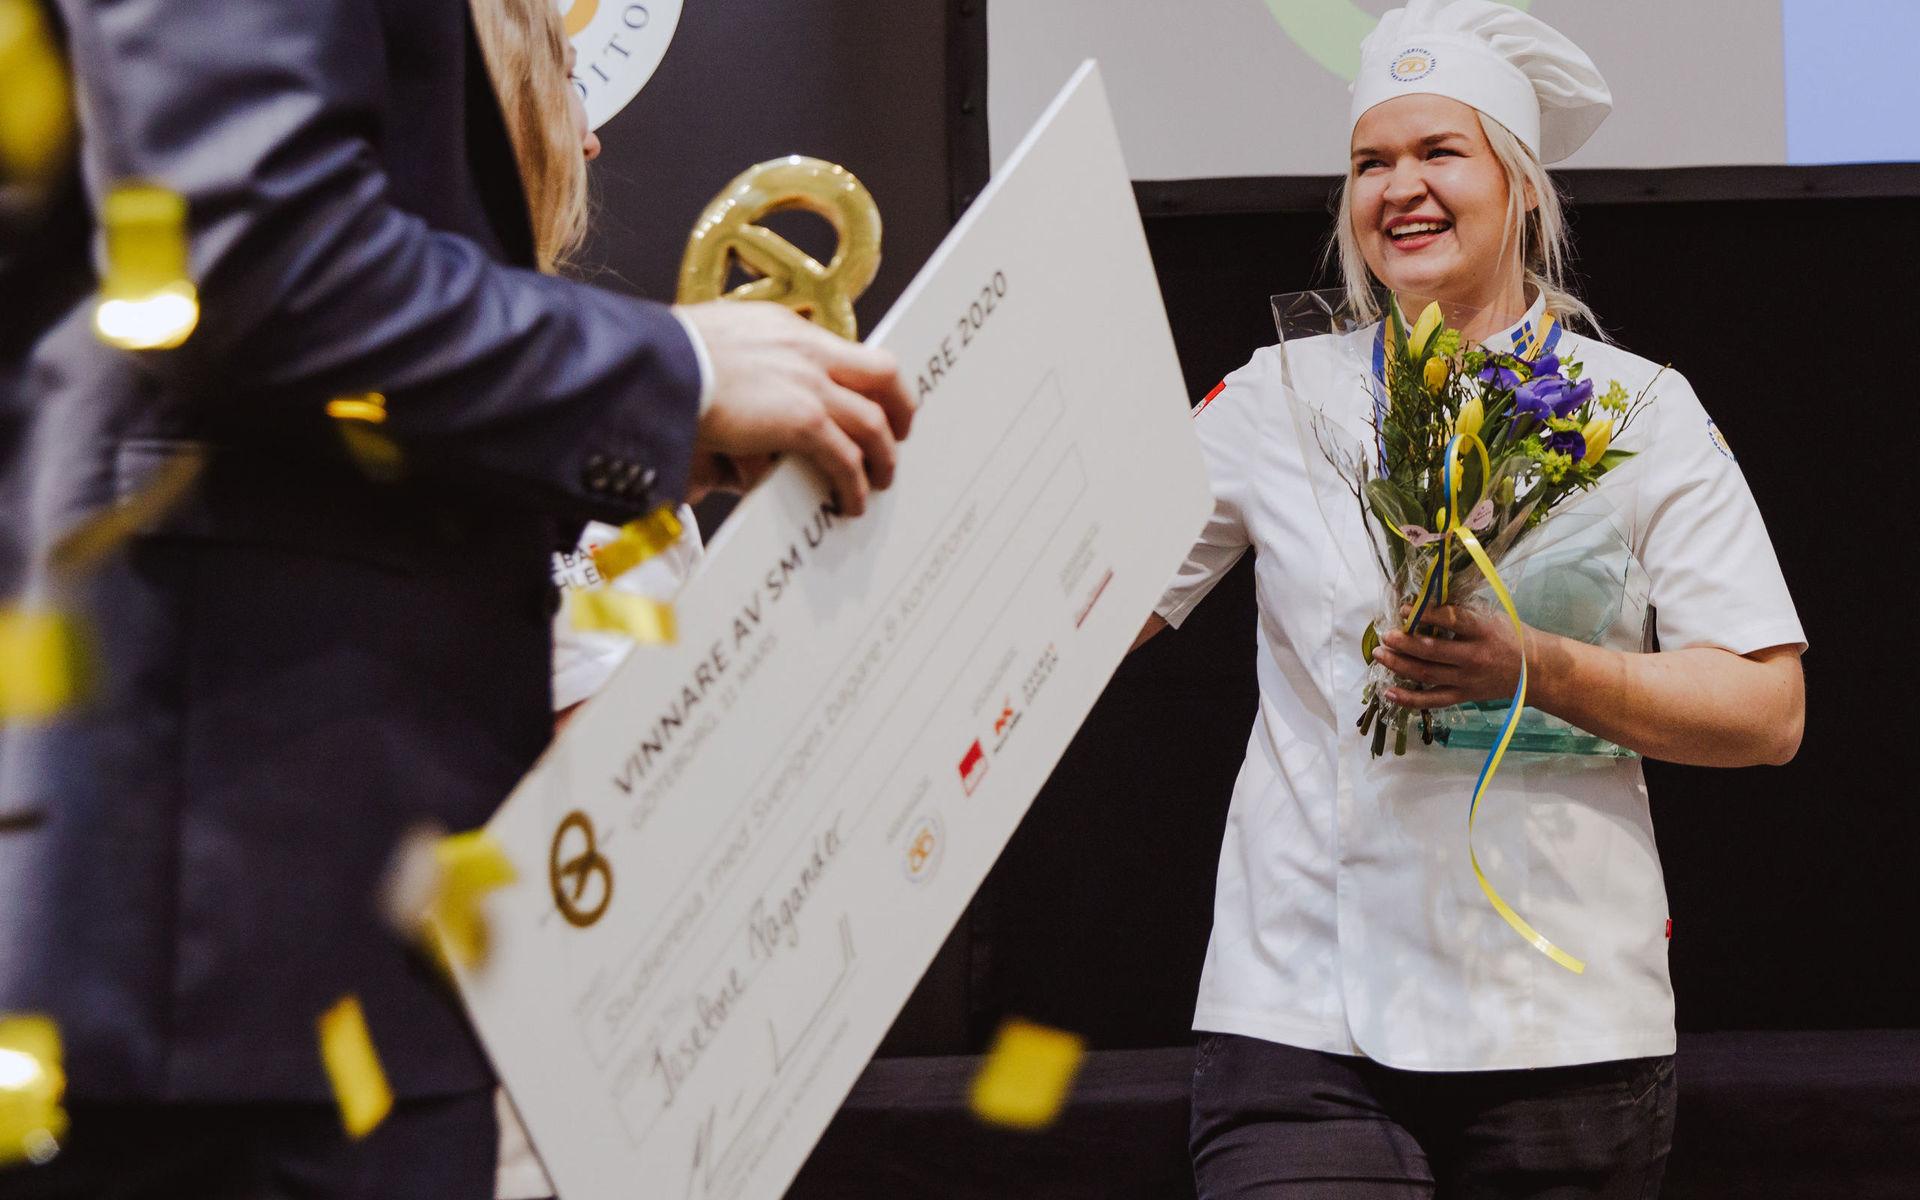 Vinnare av SM unga bagare 2020 blev Josefine Pagander.